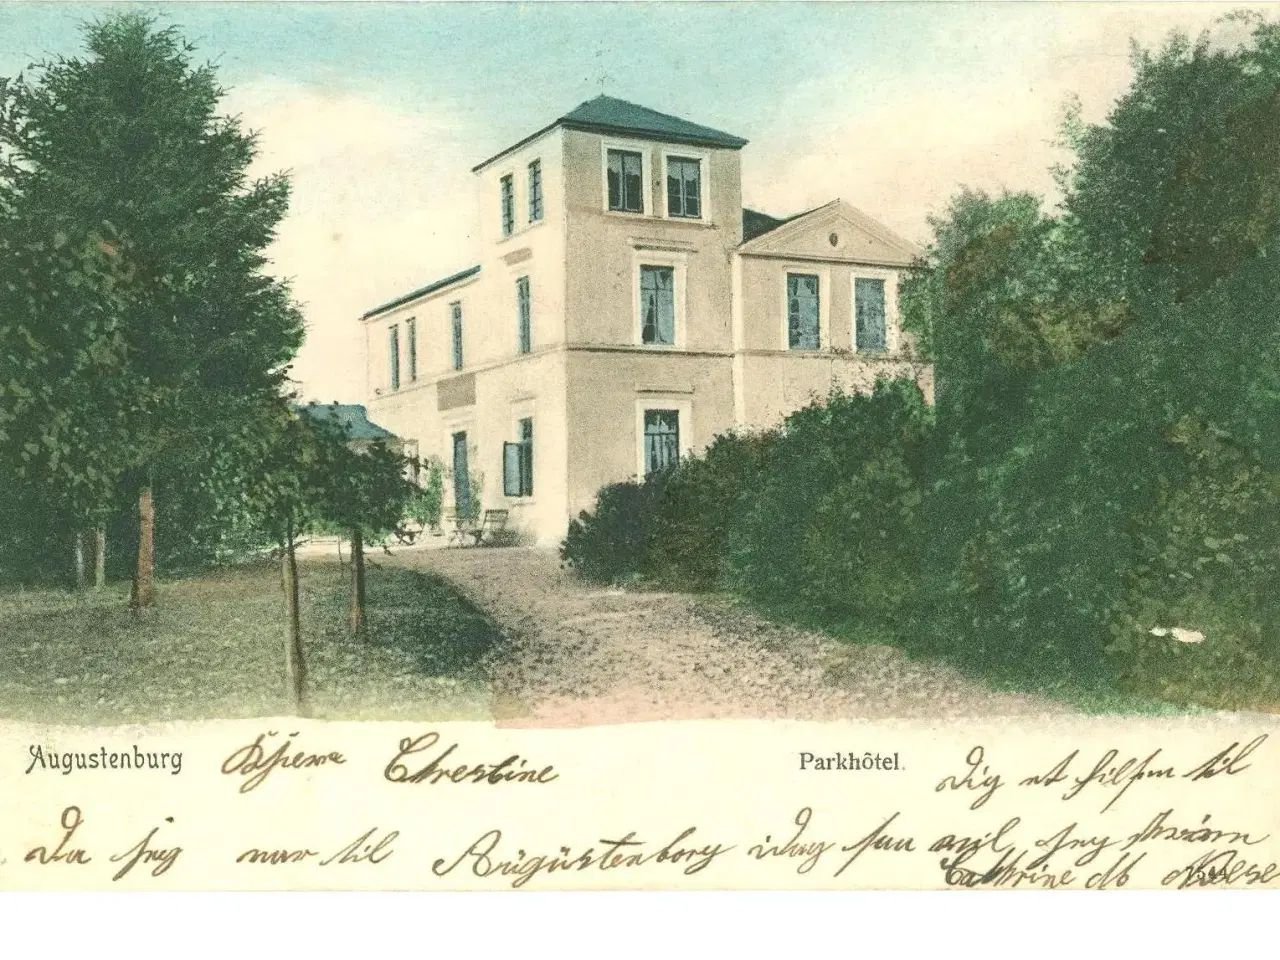 Billede 1 - Parkhotel, Augustenborg 1904